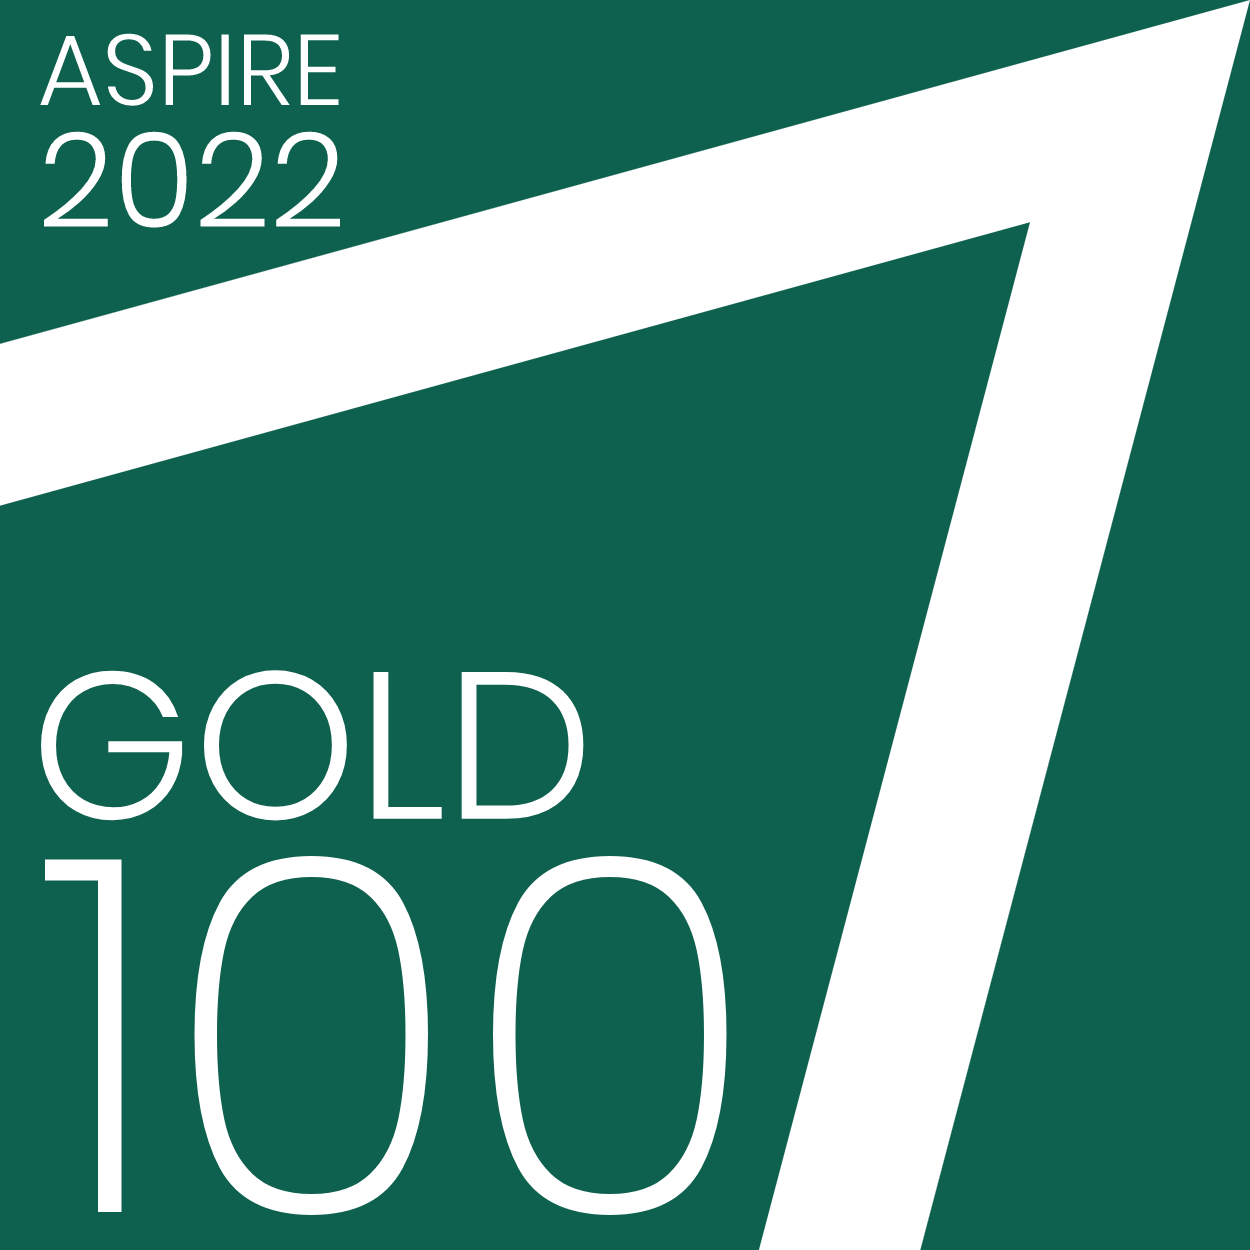 Aspire 2022 Gold 100 badge